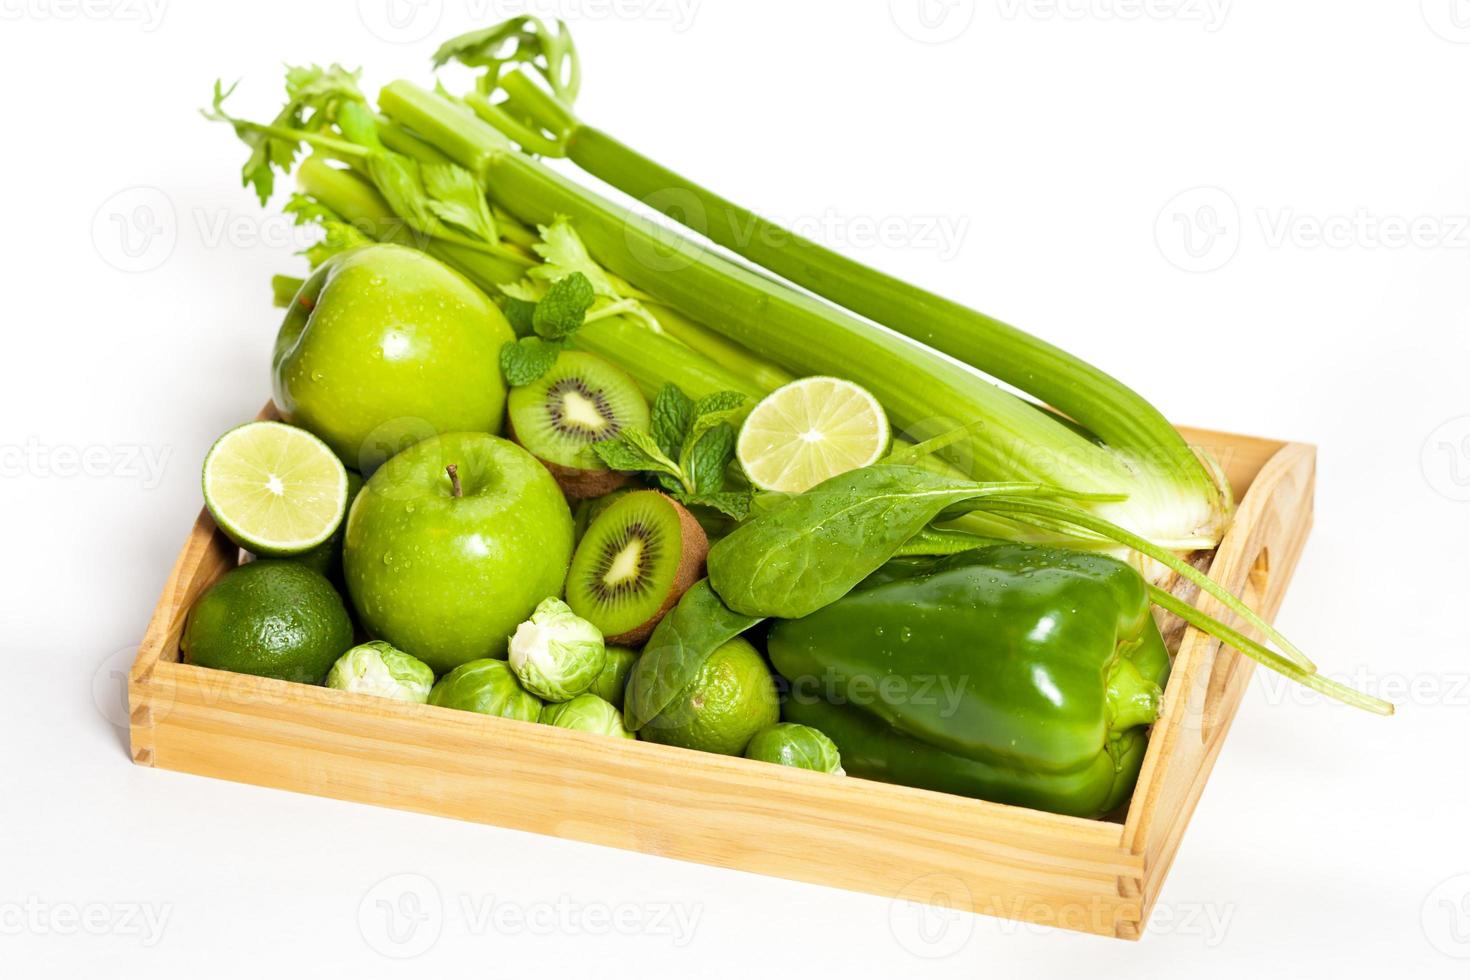 frutas e legumes verdes frescos foto